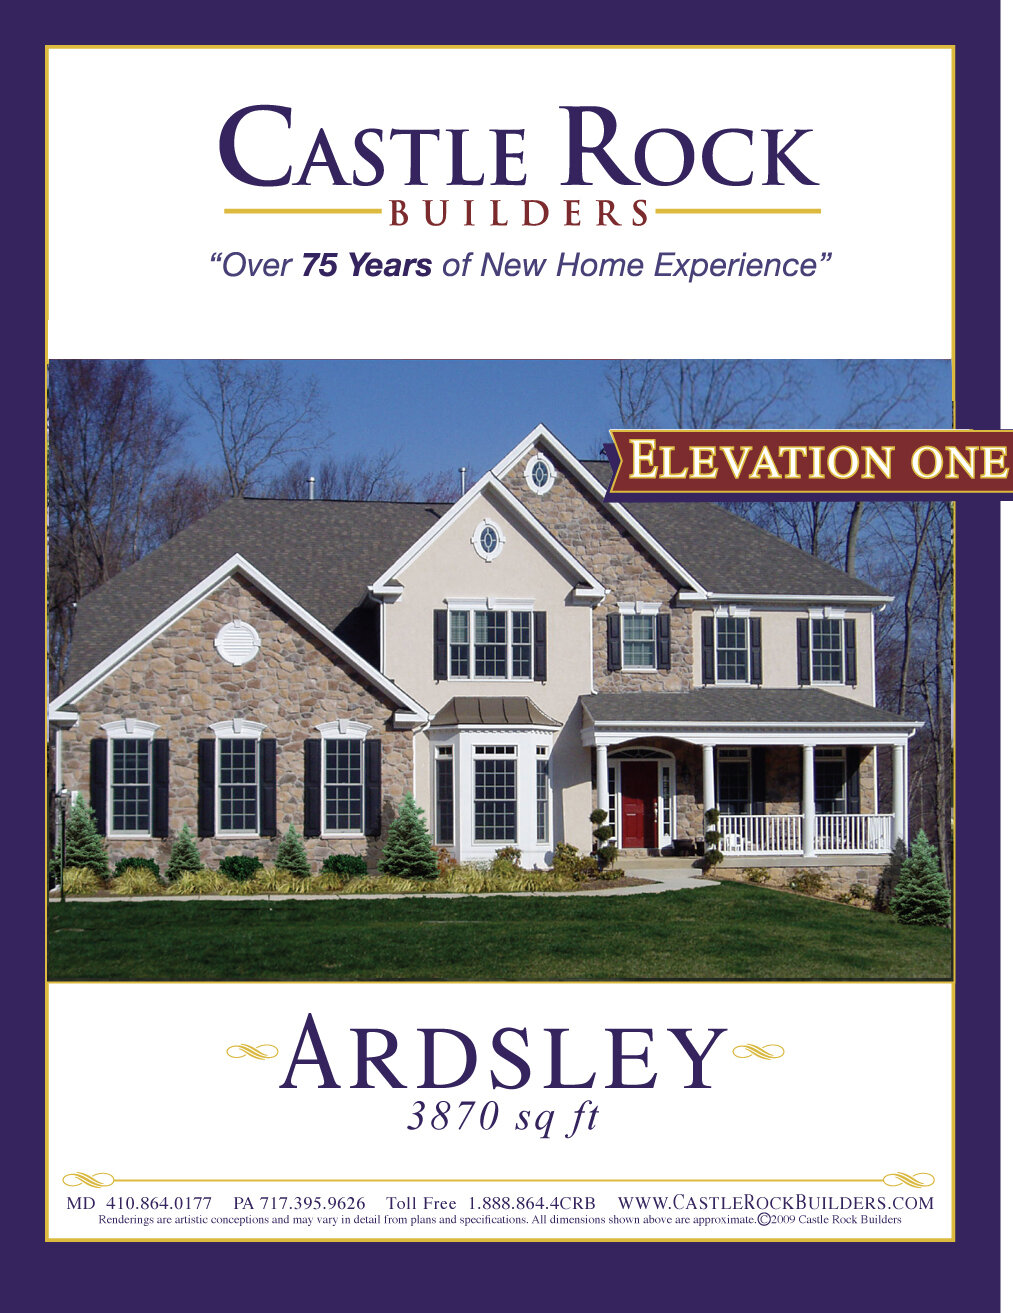 Ardsley Castle Rock Builders